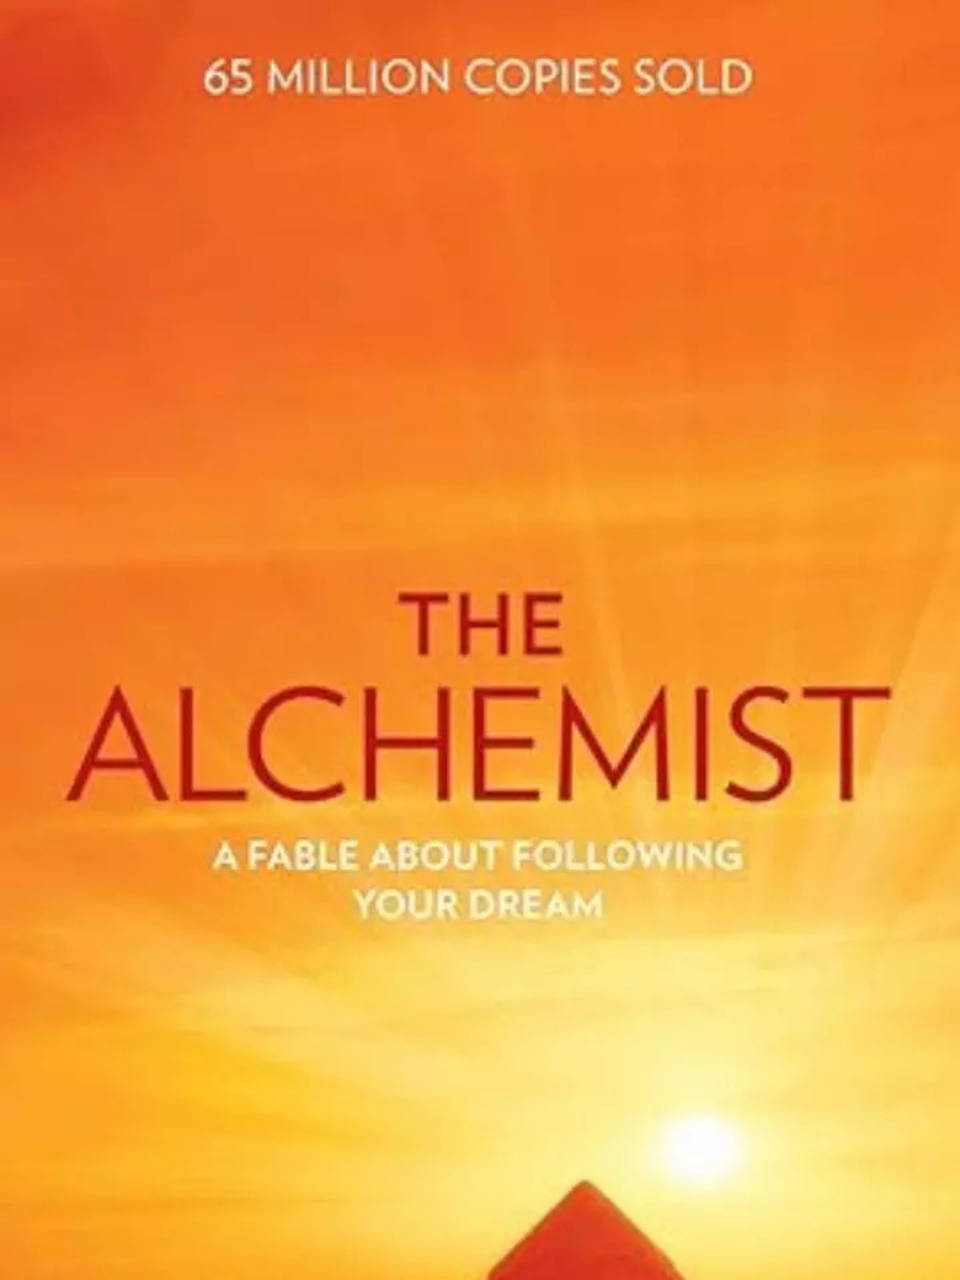 Explaining 'The Alchemist' by Paulo Coelho in 10 sentences